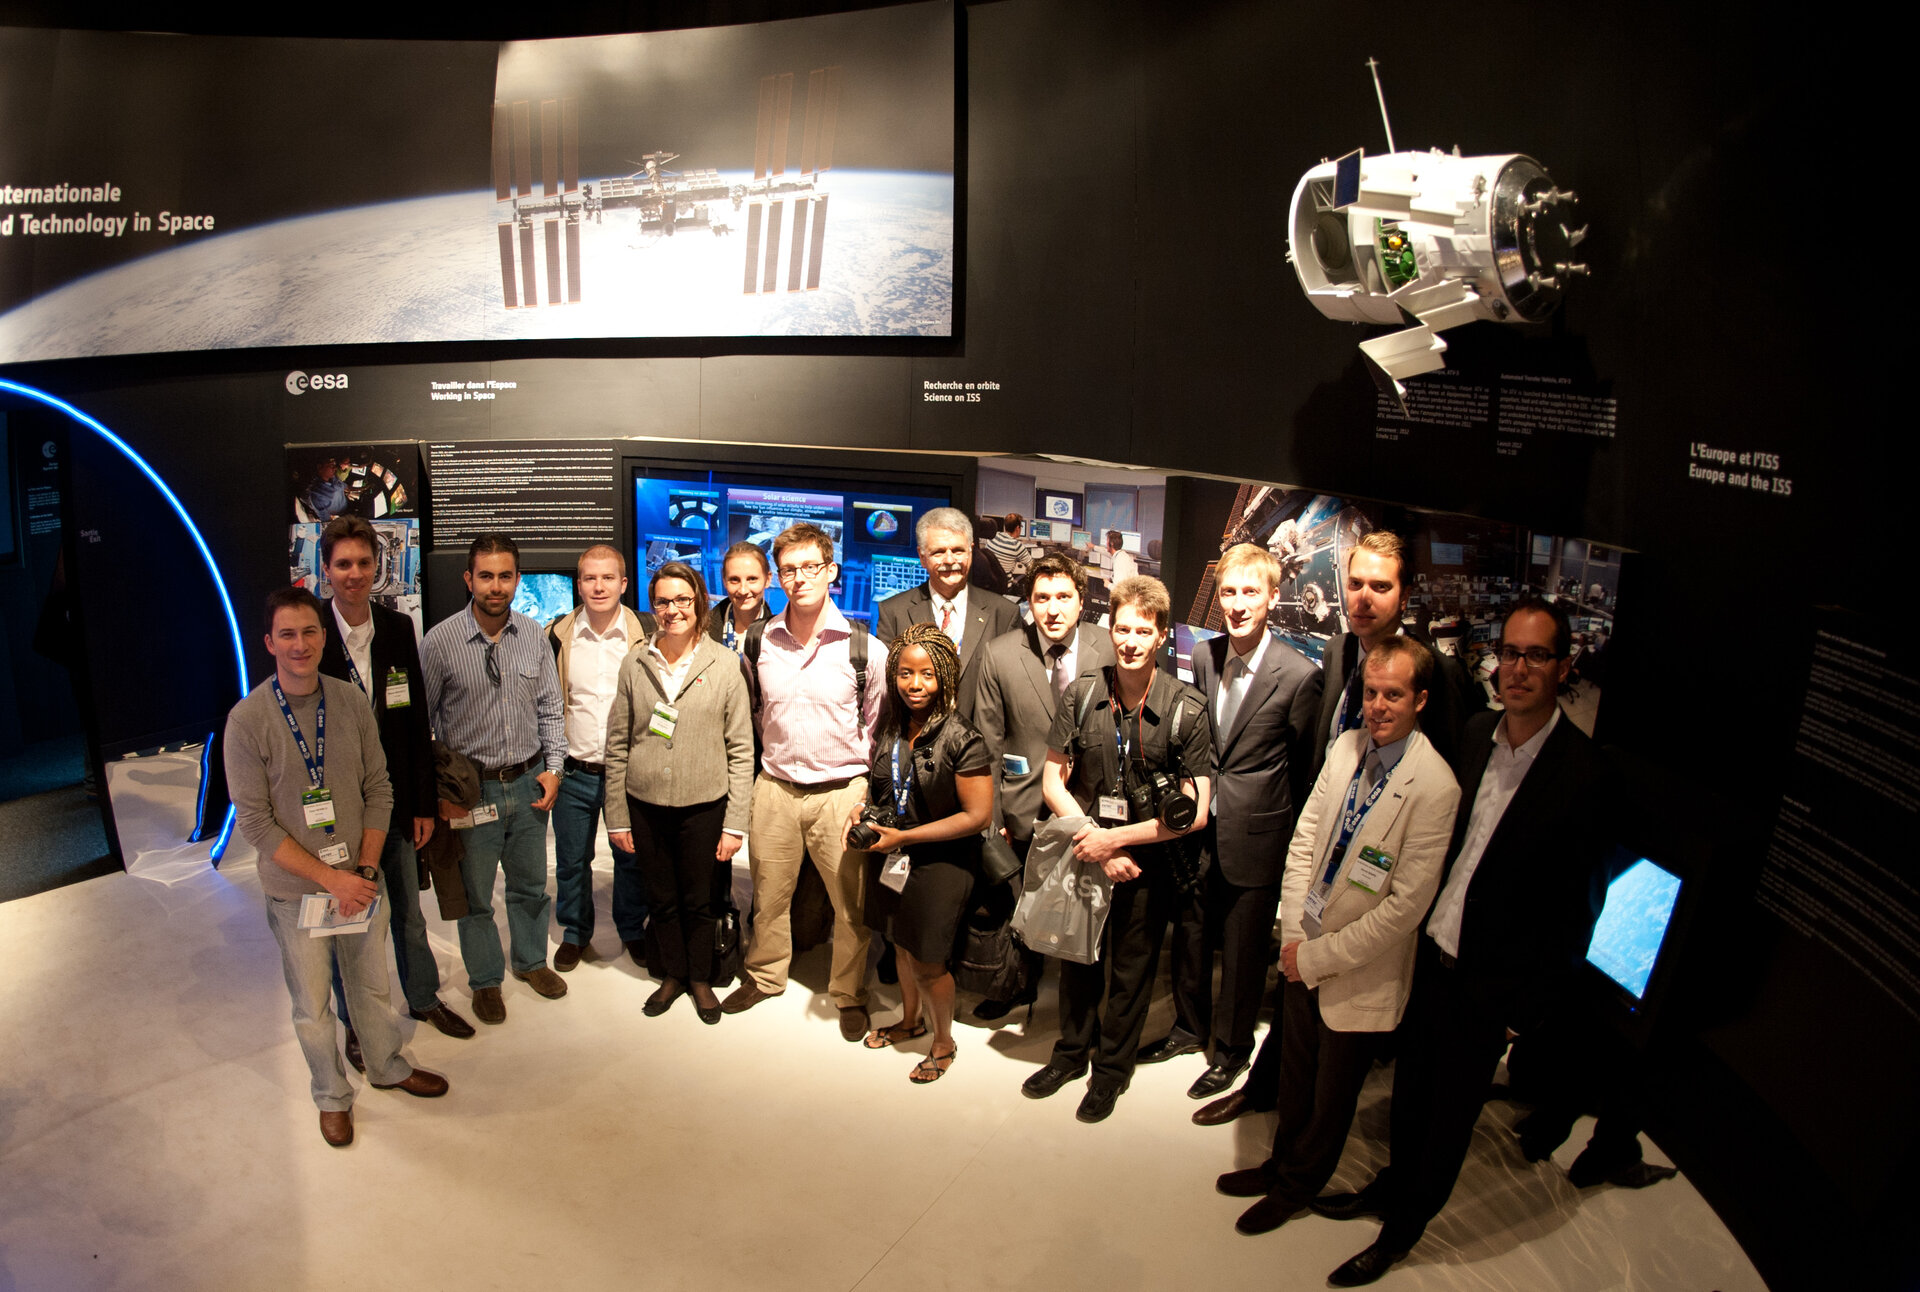 "Young ESA" staffs and Franco Bonacina visit the ESA pavilion